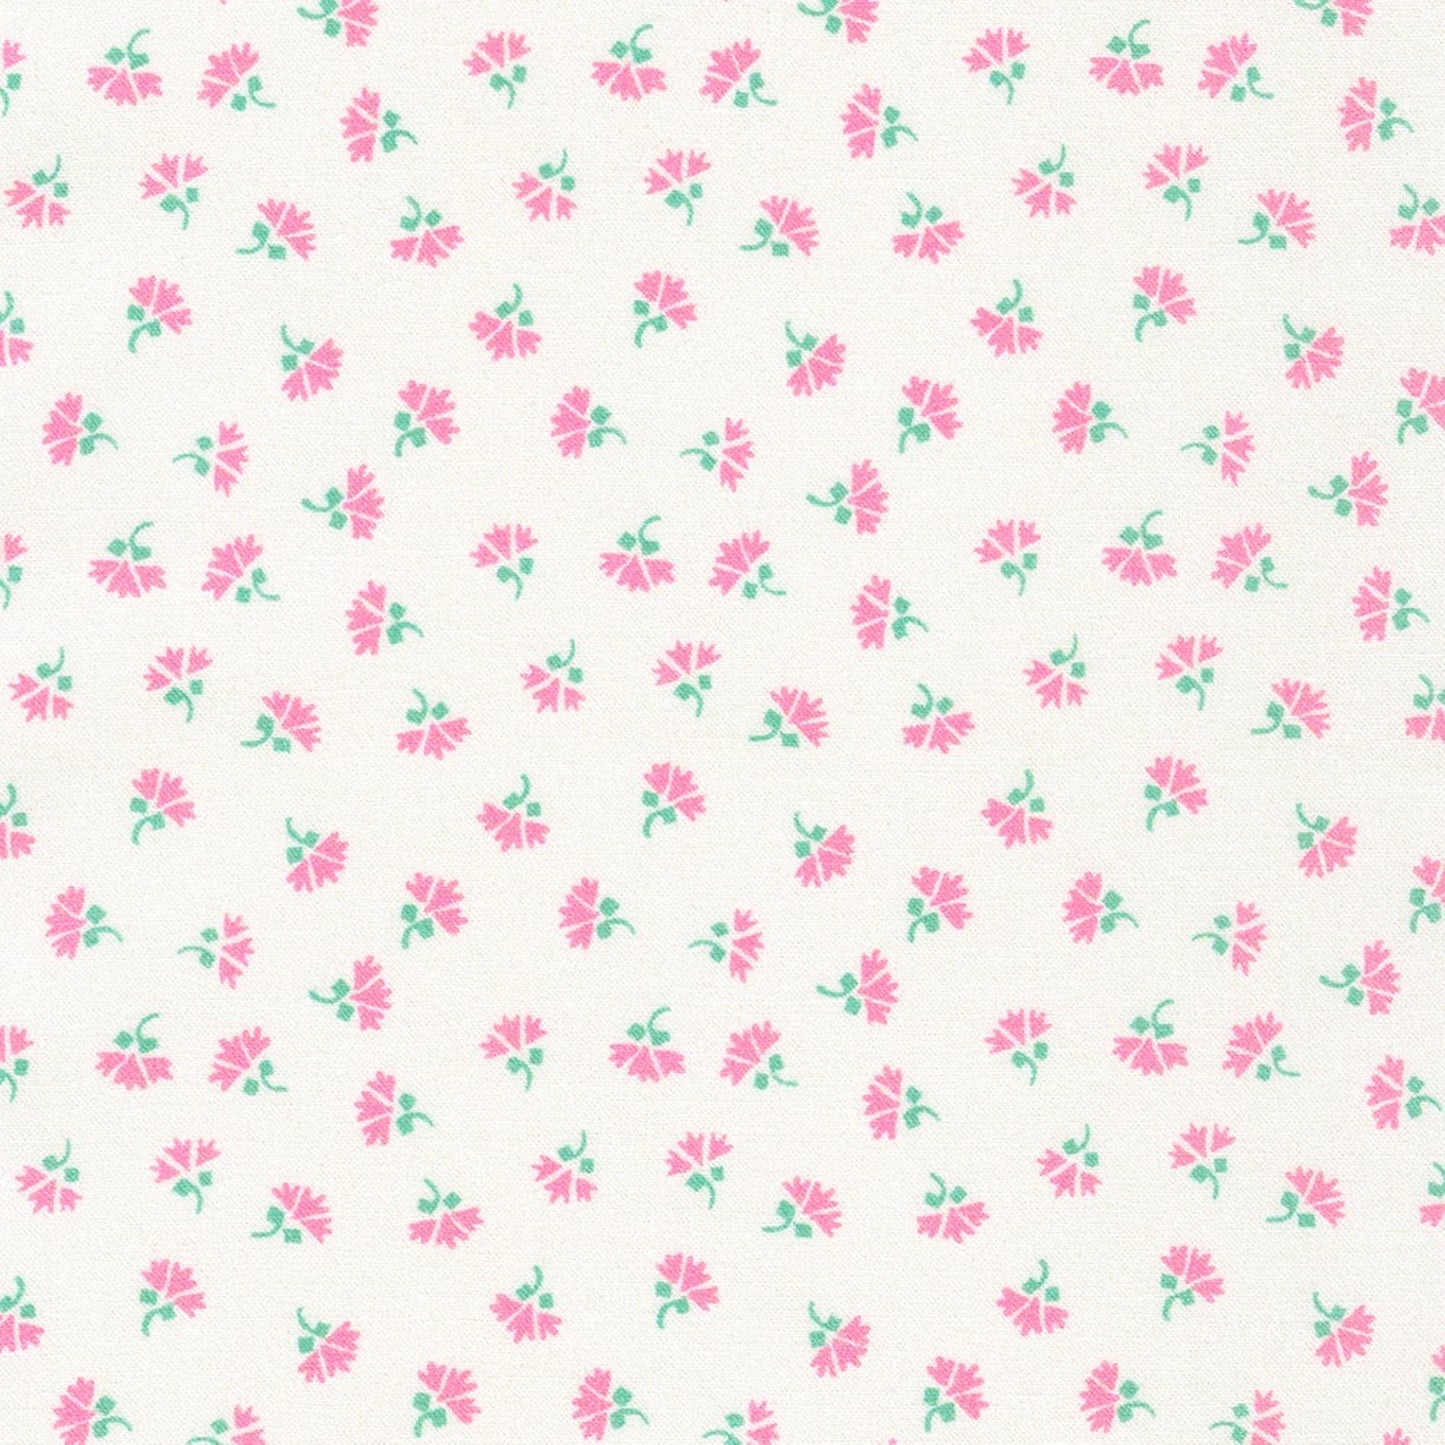 Little Blossoms bouquets pink white 1930's style floral Kaufman cotton quilt fabric